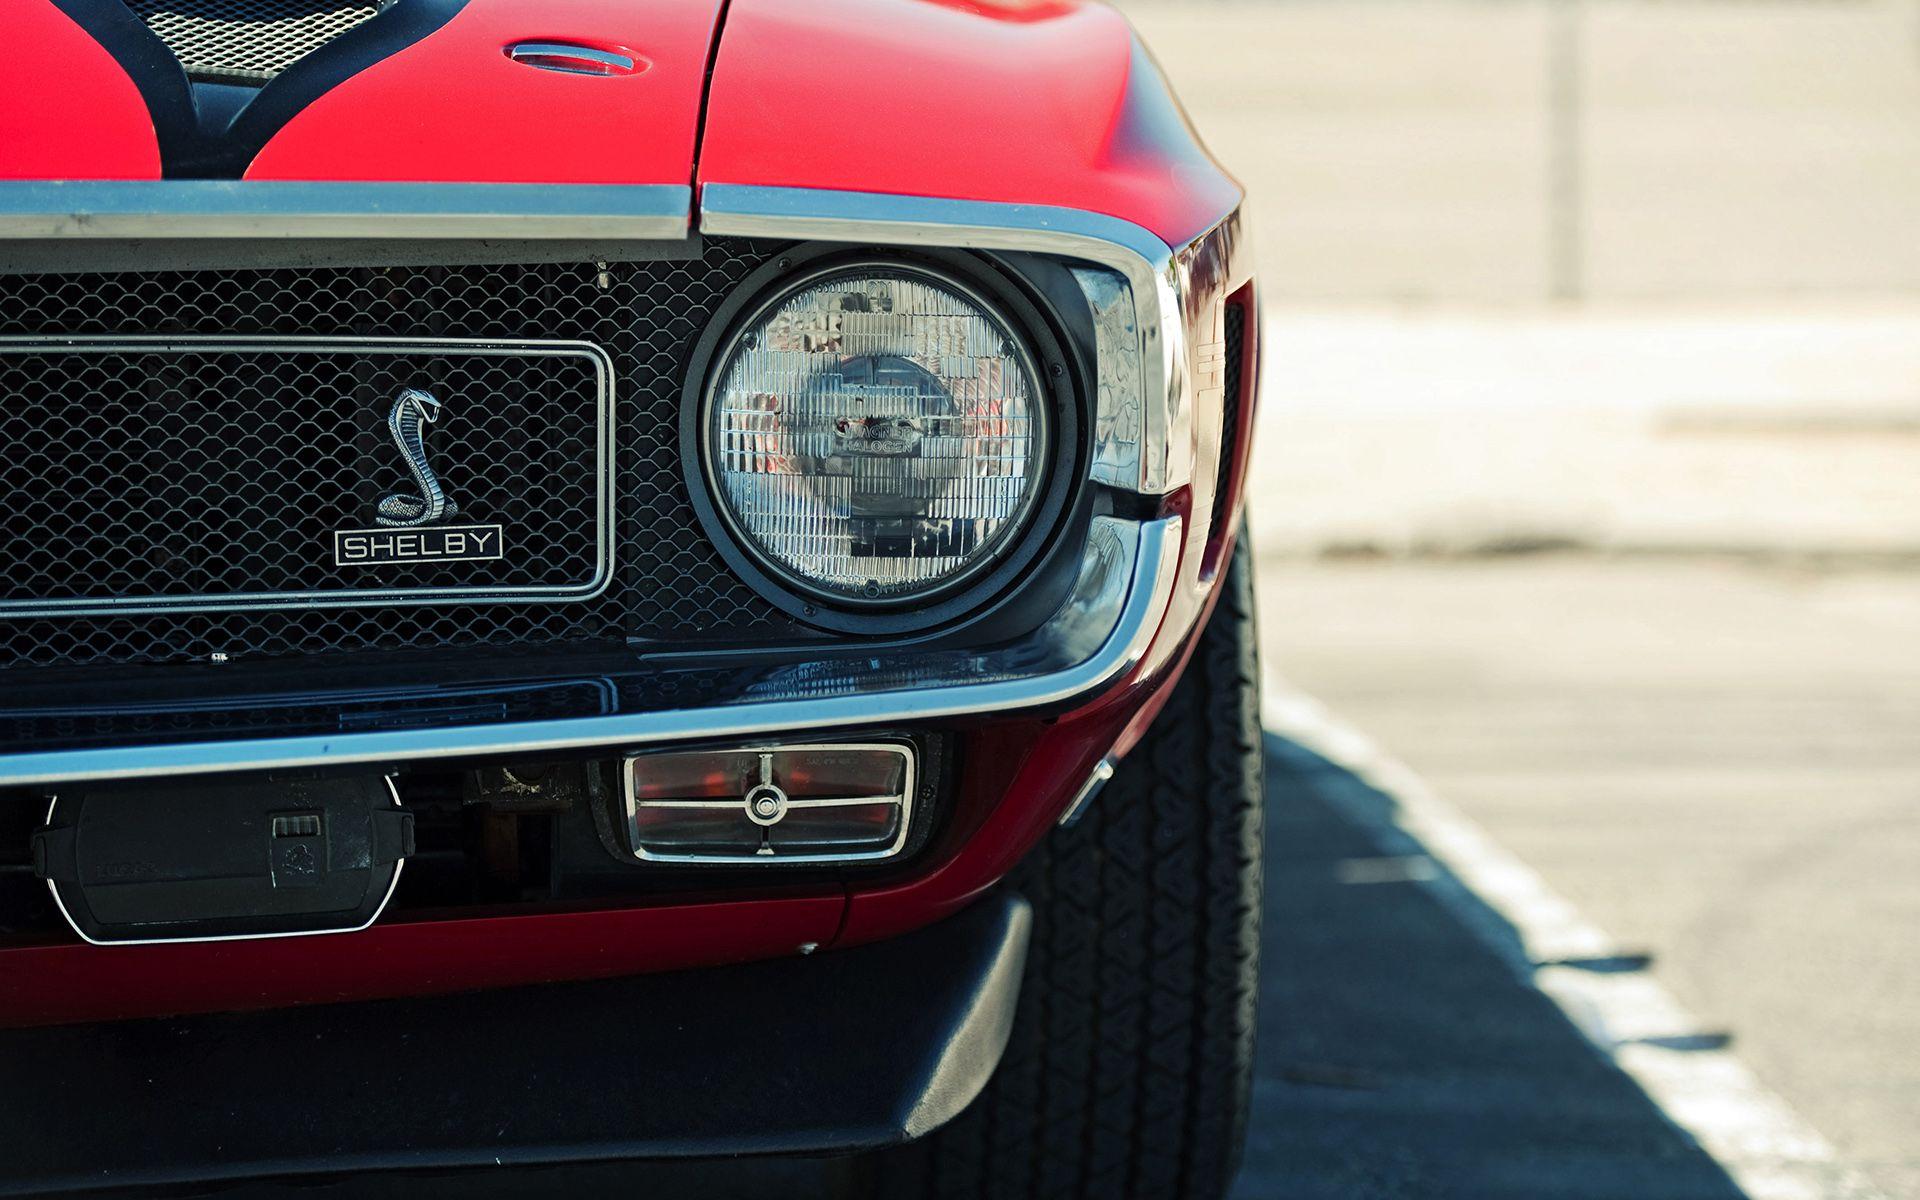 Shelby Mustang Wallpaper. HD Car Wallpaper